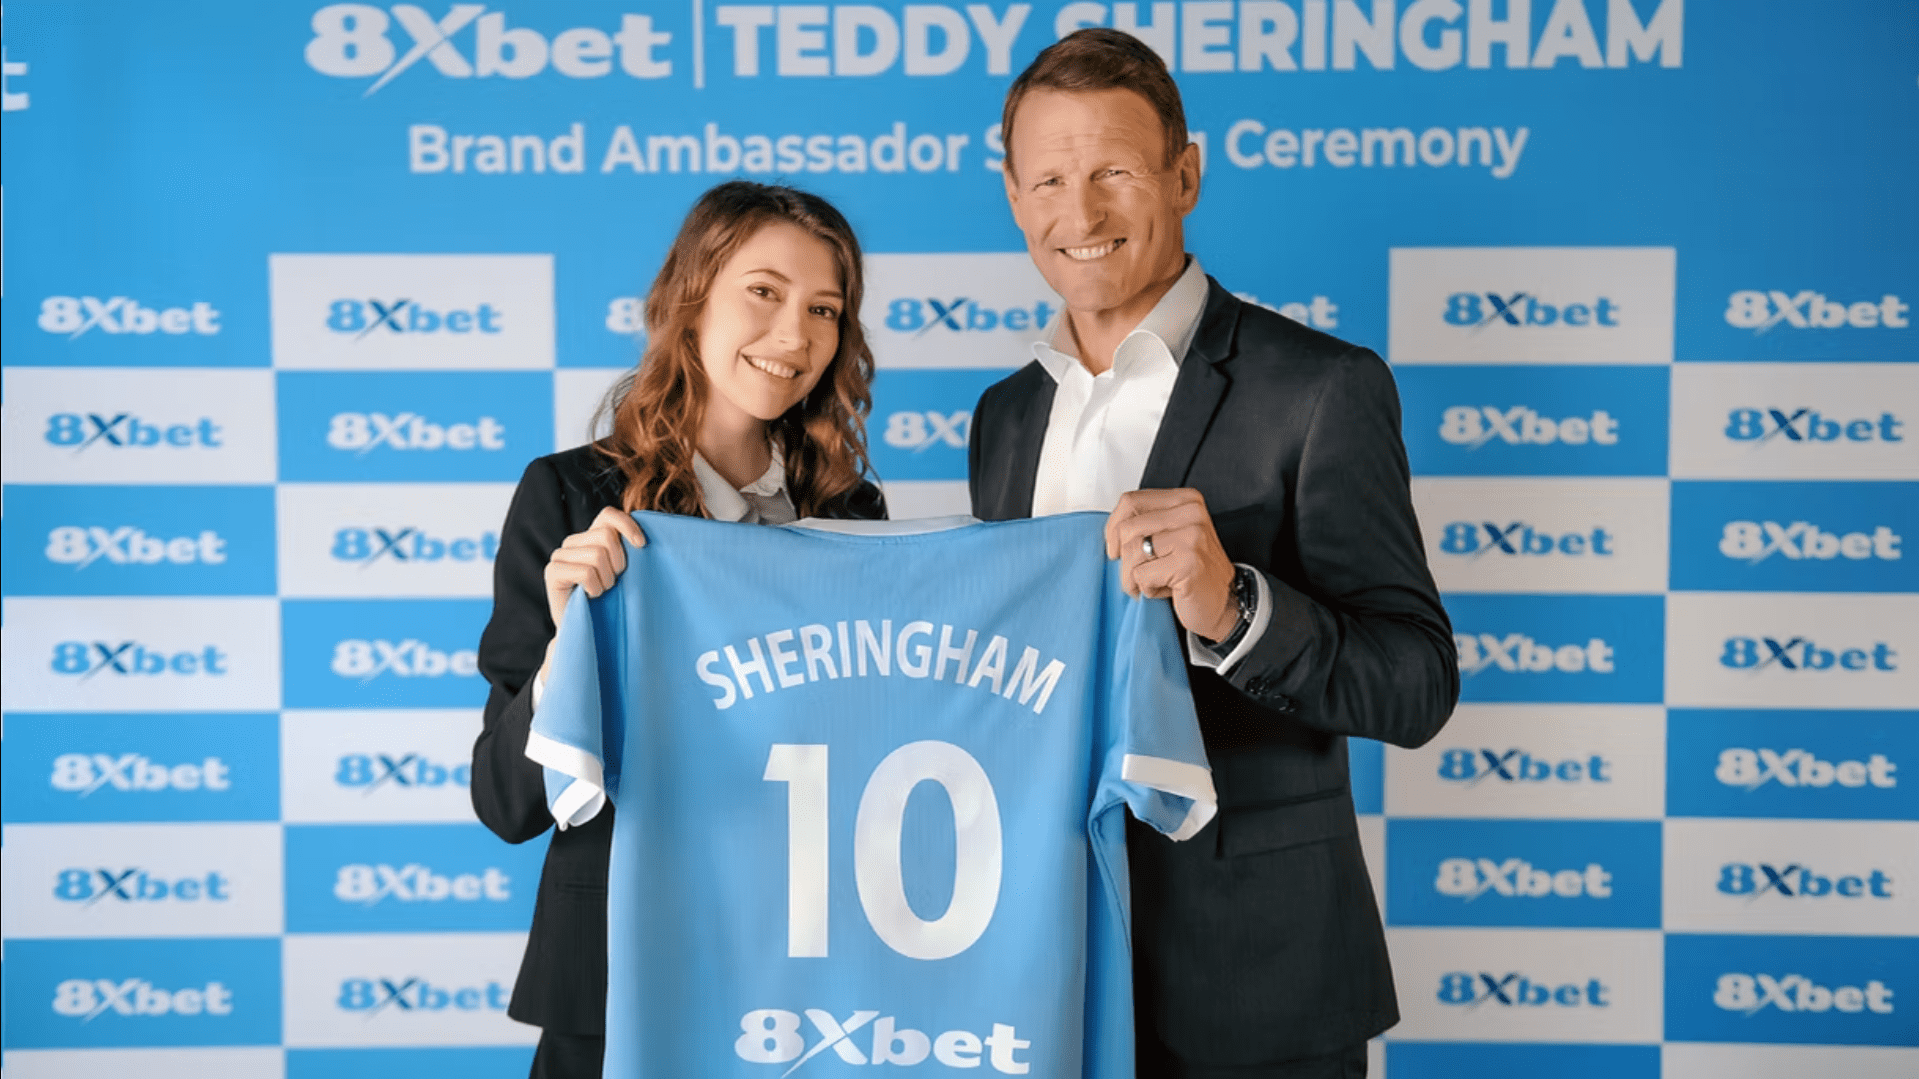 Teddy sherengham brand Ambassador of 8xbet